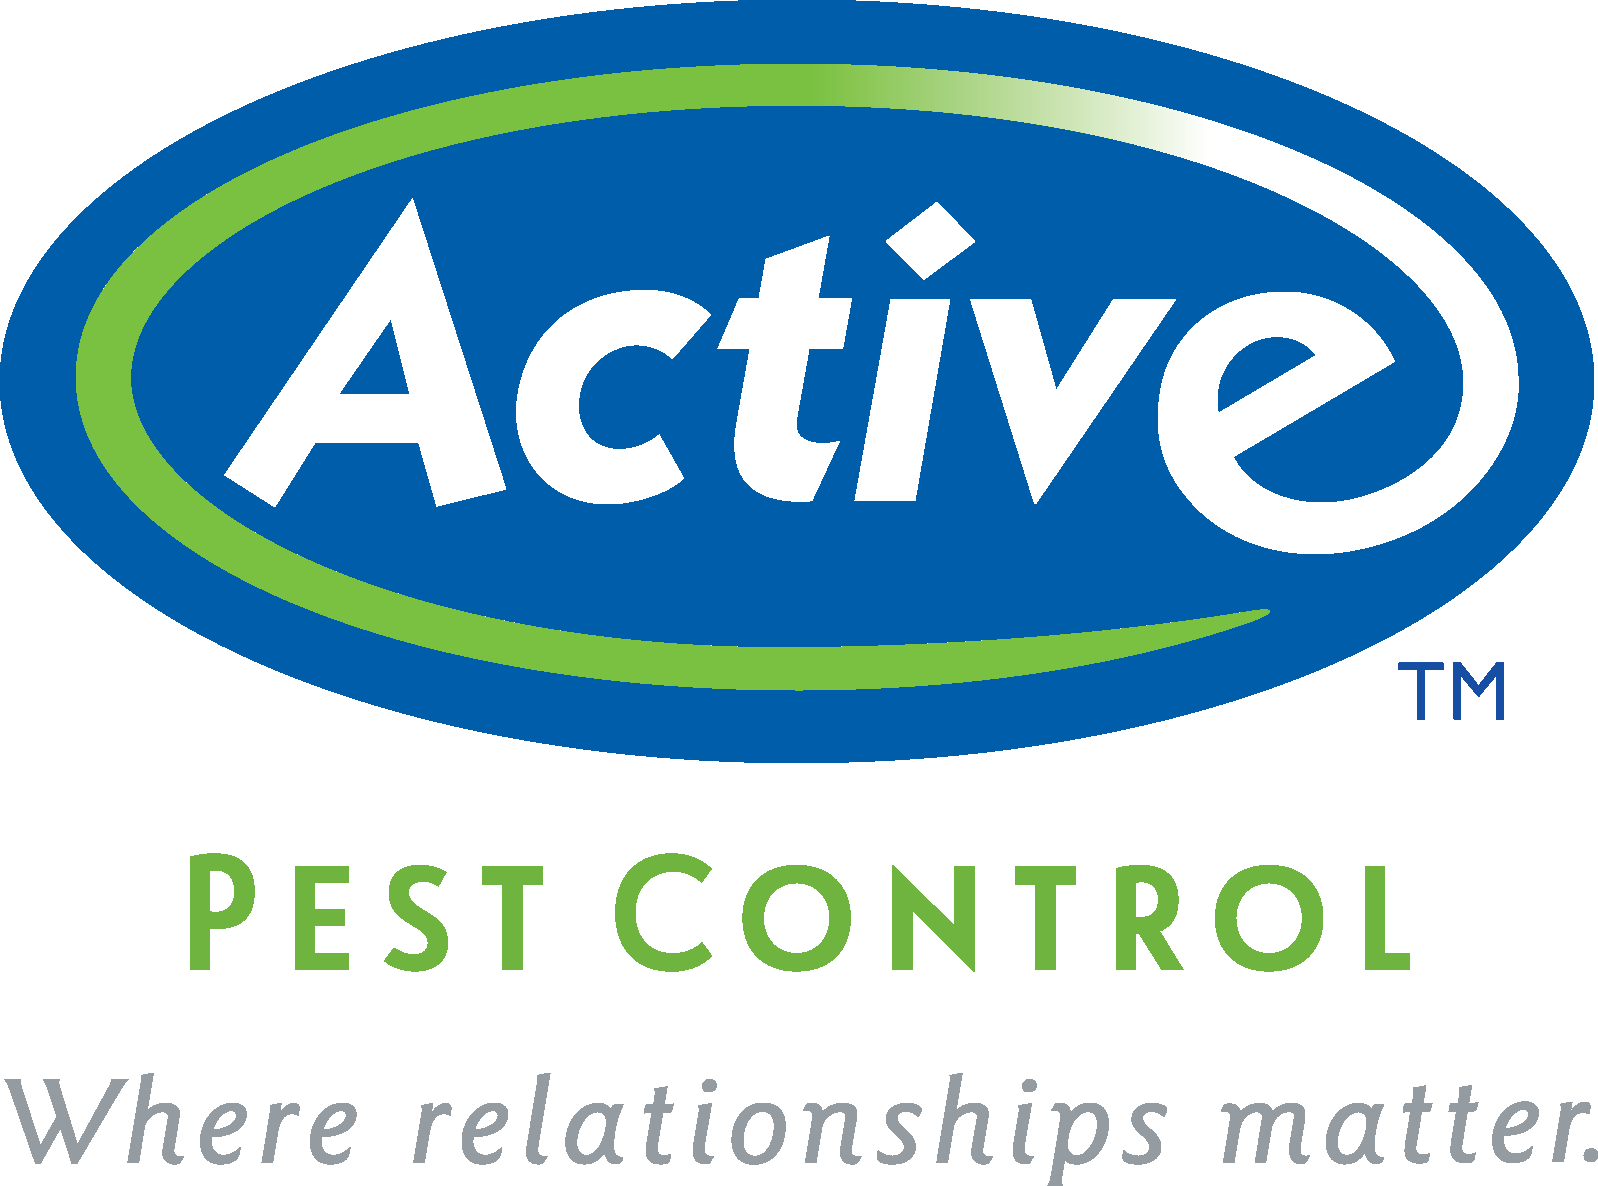 Pest Control Company Icon - Active Pest Control Mcdonough (1598x1186)